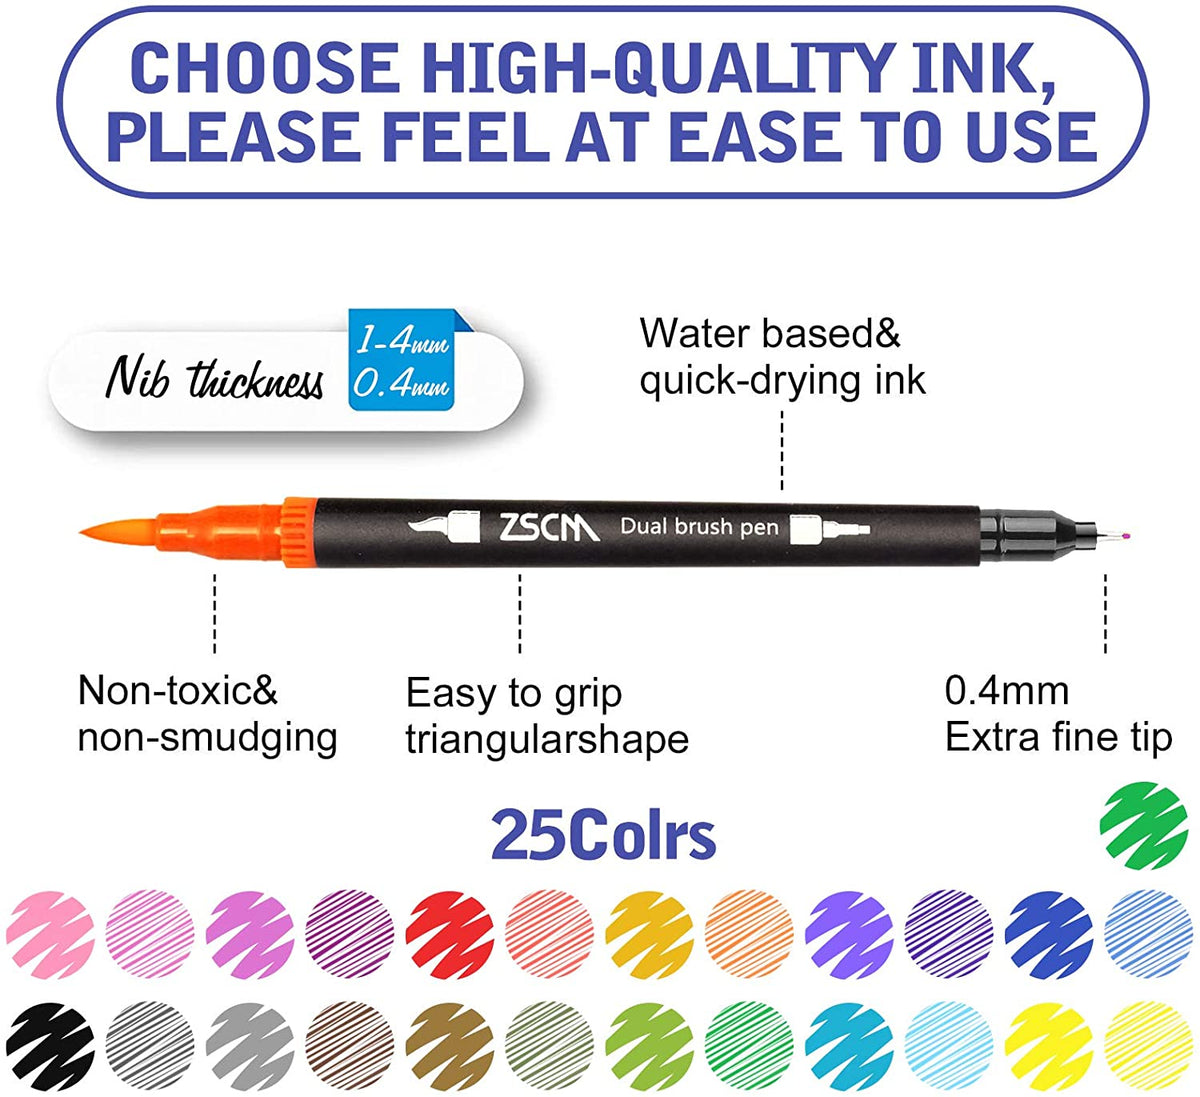 ZSCM QUALITY DECIDES THE FUTURE ZSCM 32 Colors Dual Tip Brush Pens